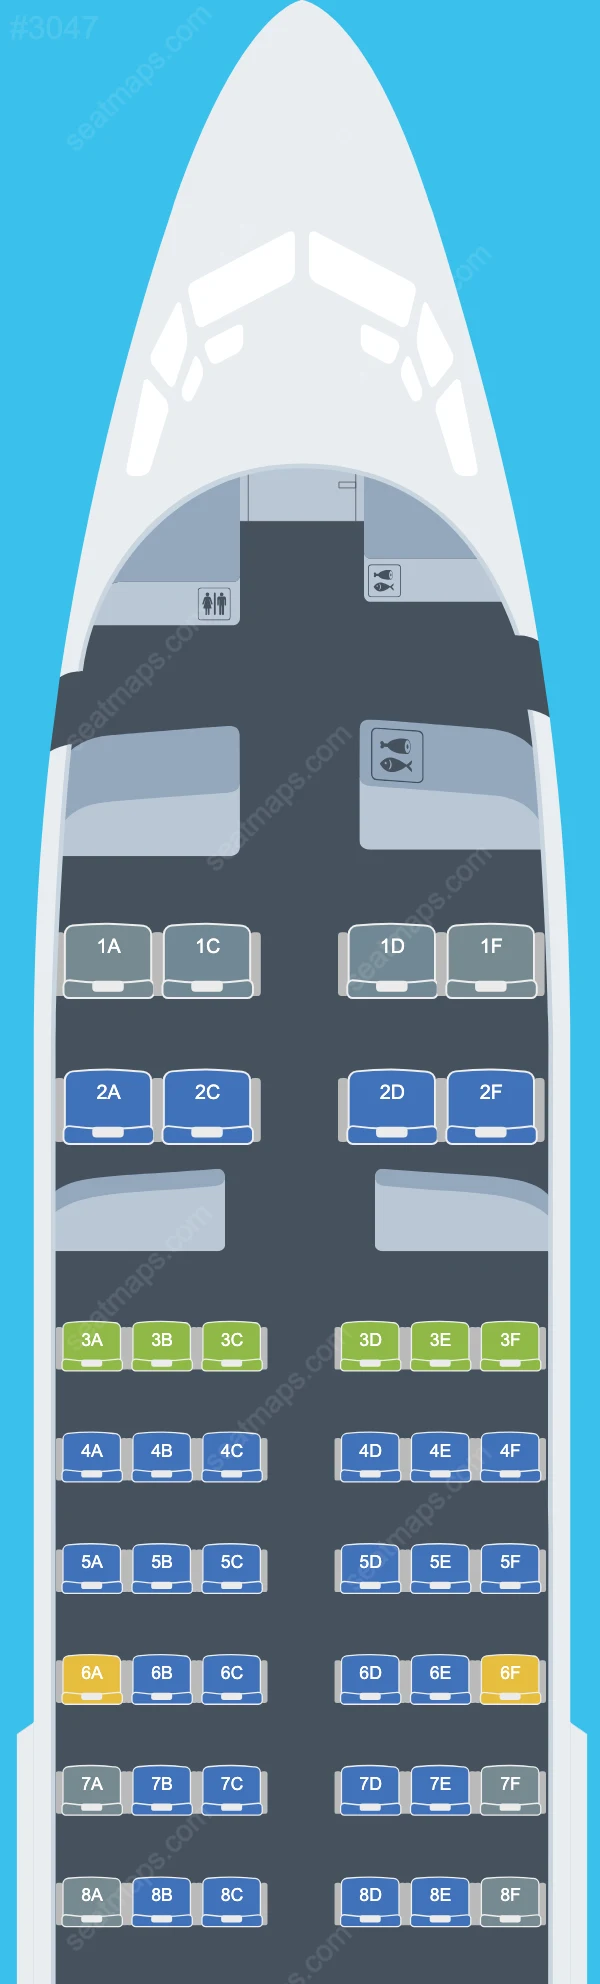 Aerolineas Argentinas Boeing 737 Seat Maps 737-700